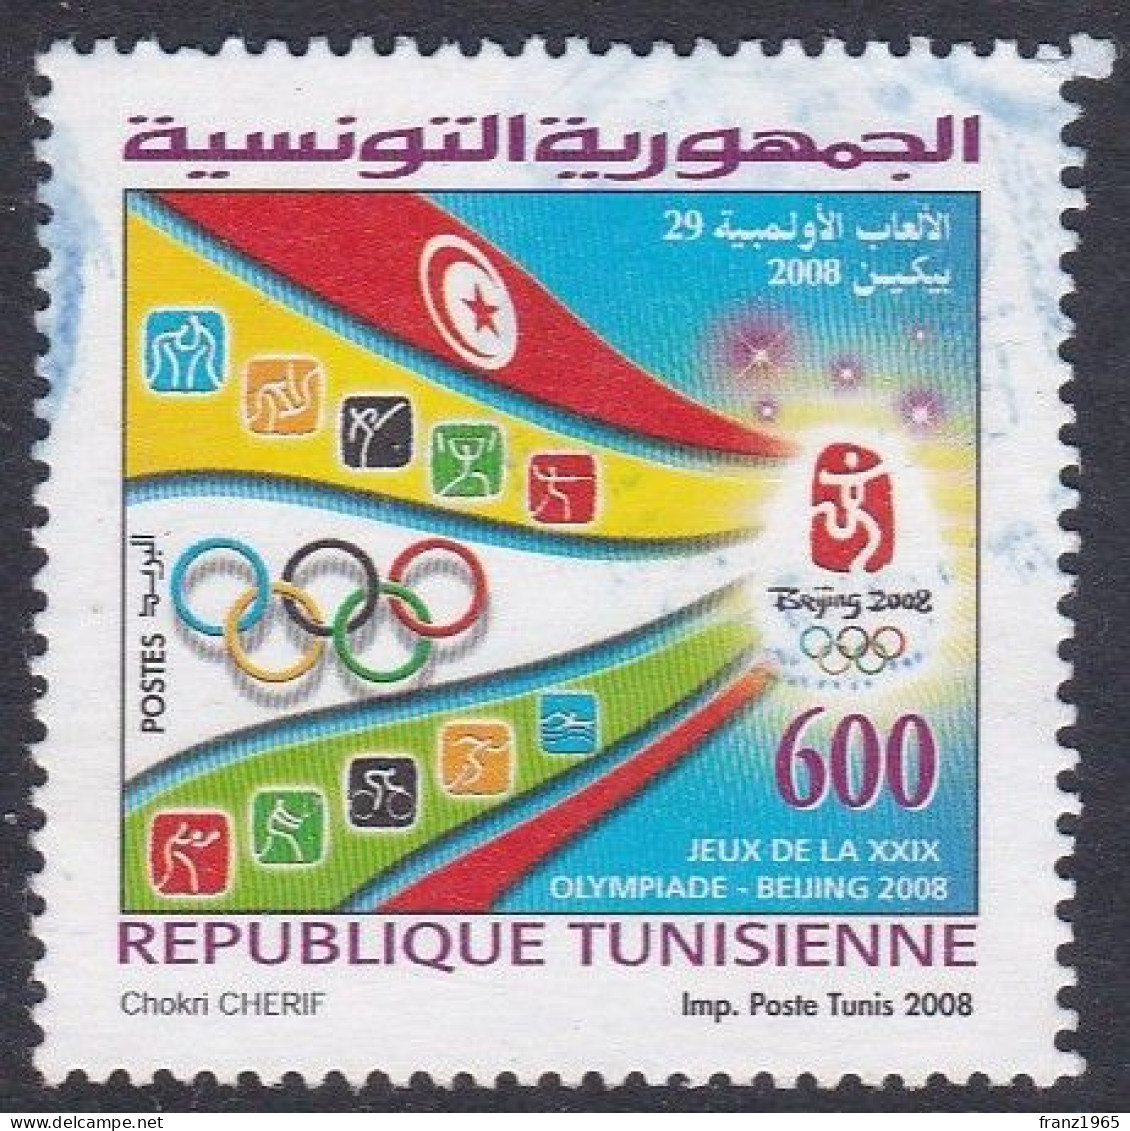 Beijing Olympics - 2008 - Tunisia (1956-...)